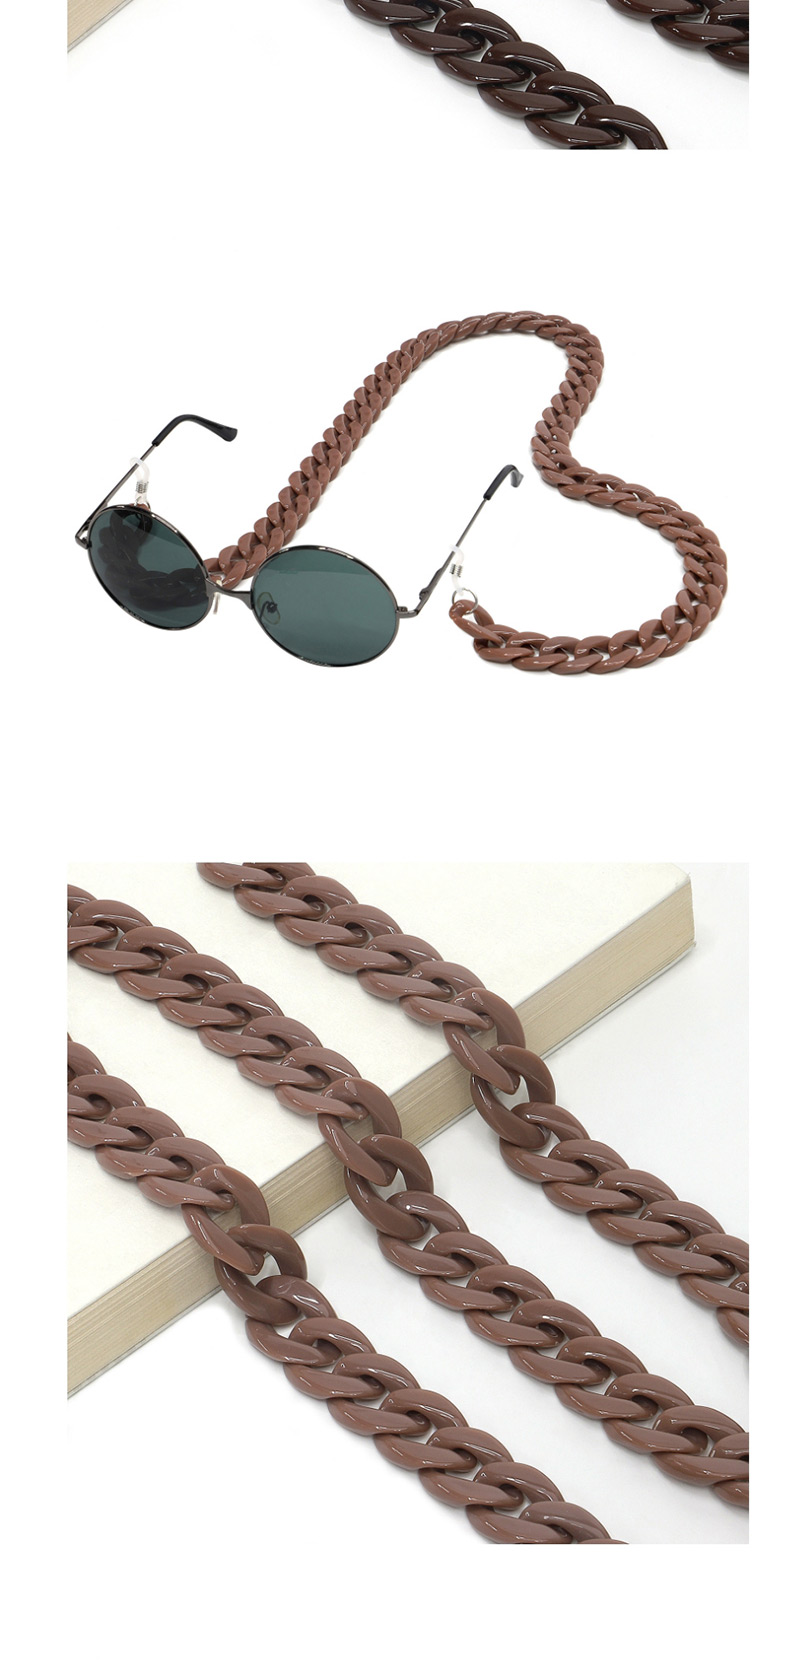  Grass Green Acrylic Glasses Chain,Sunglasses Chain